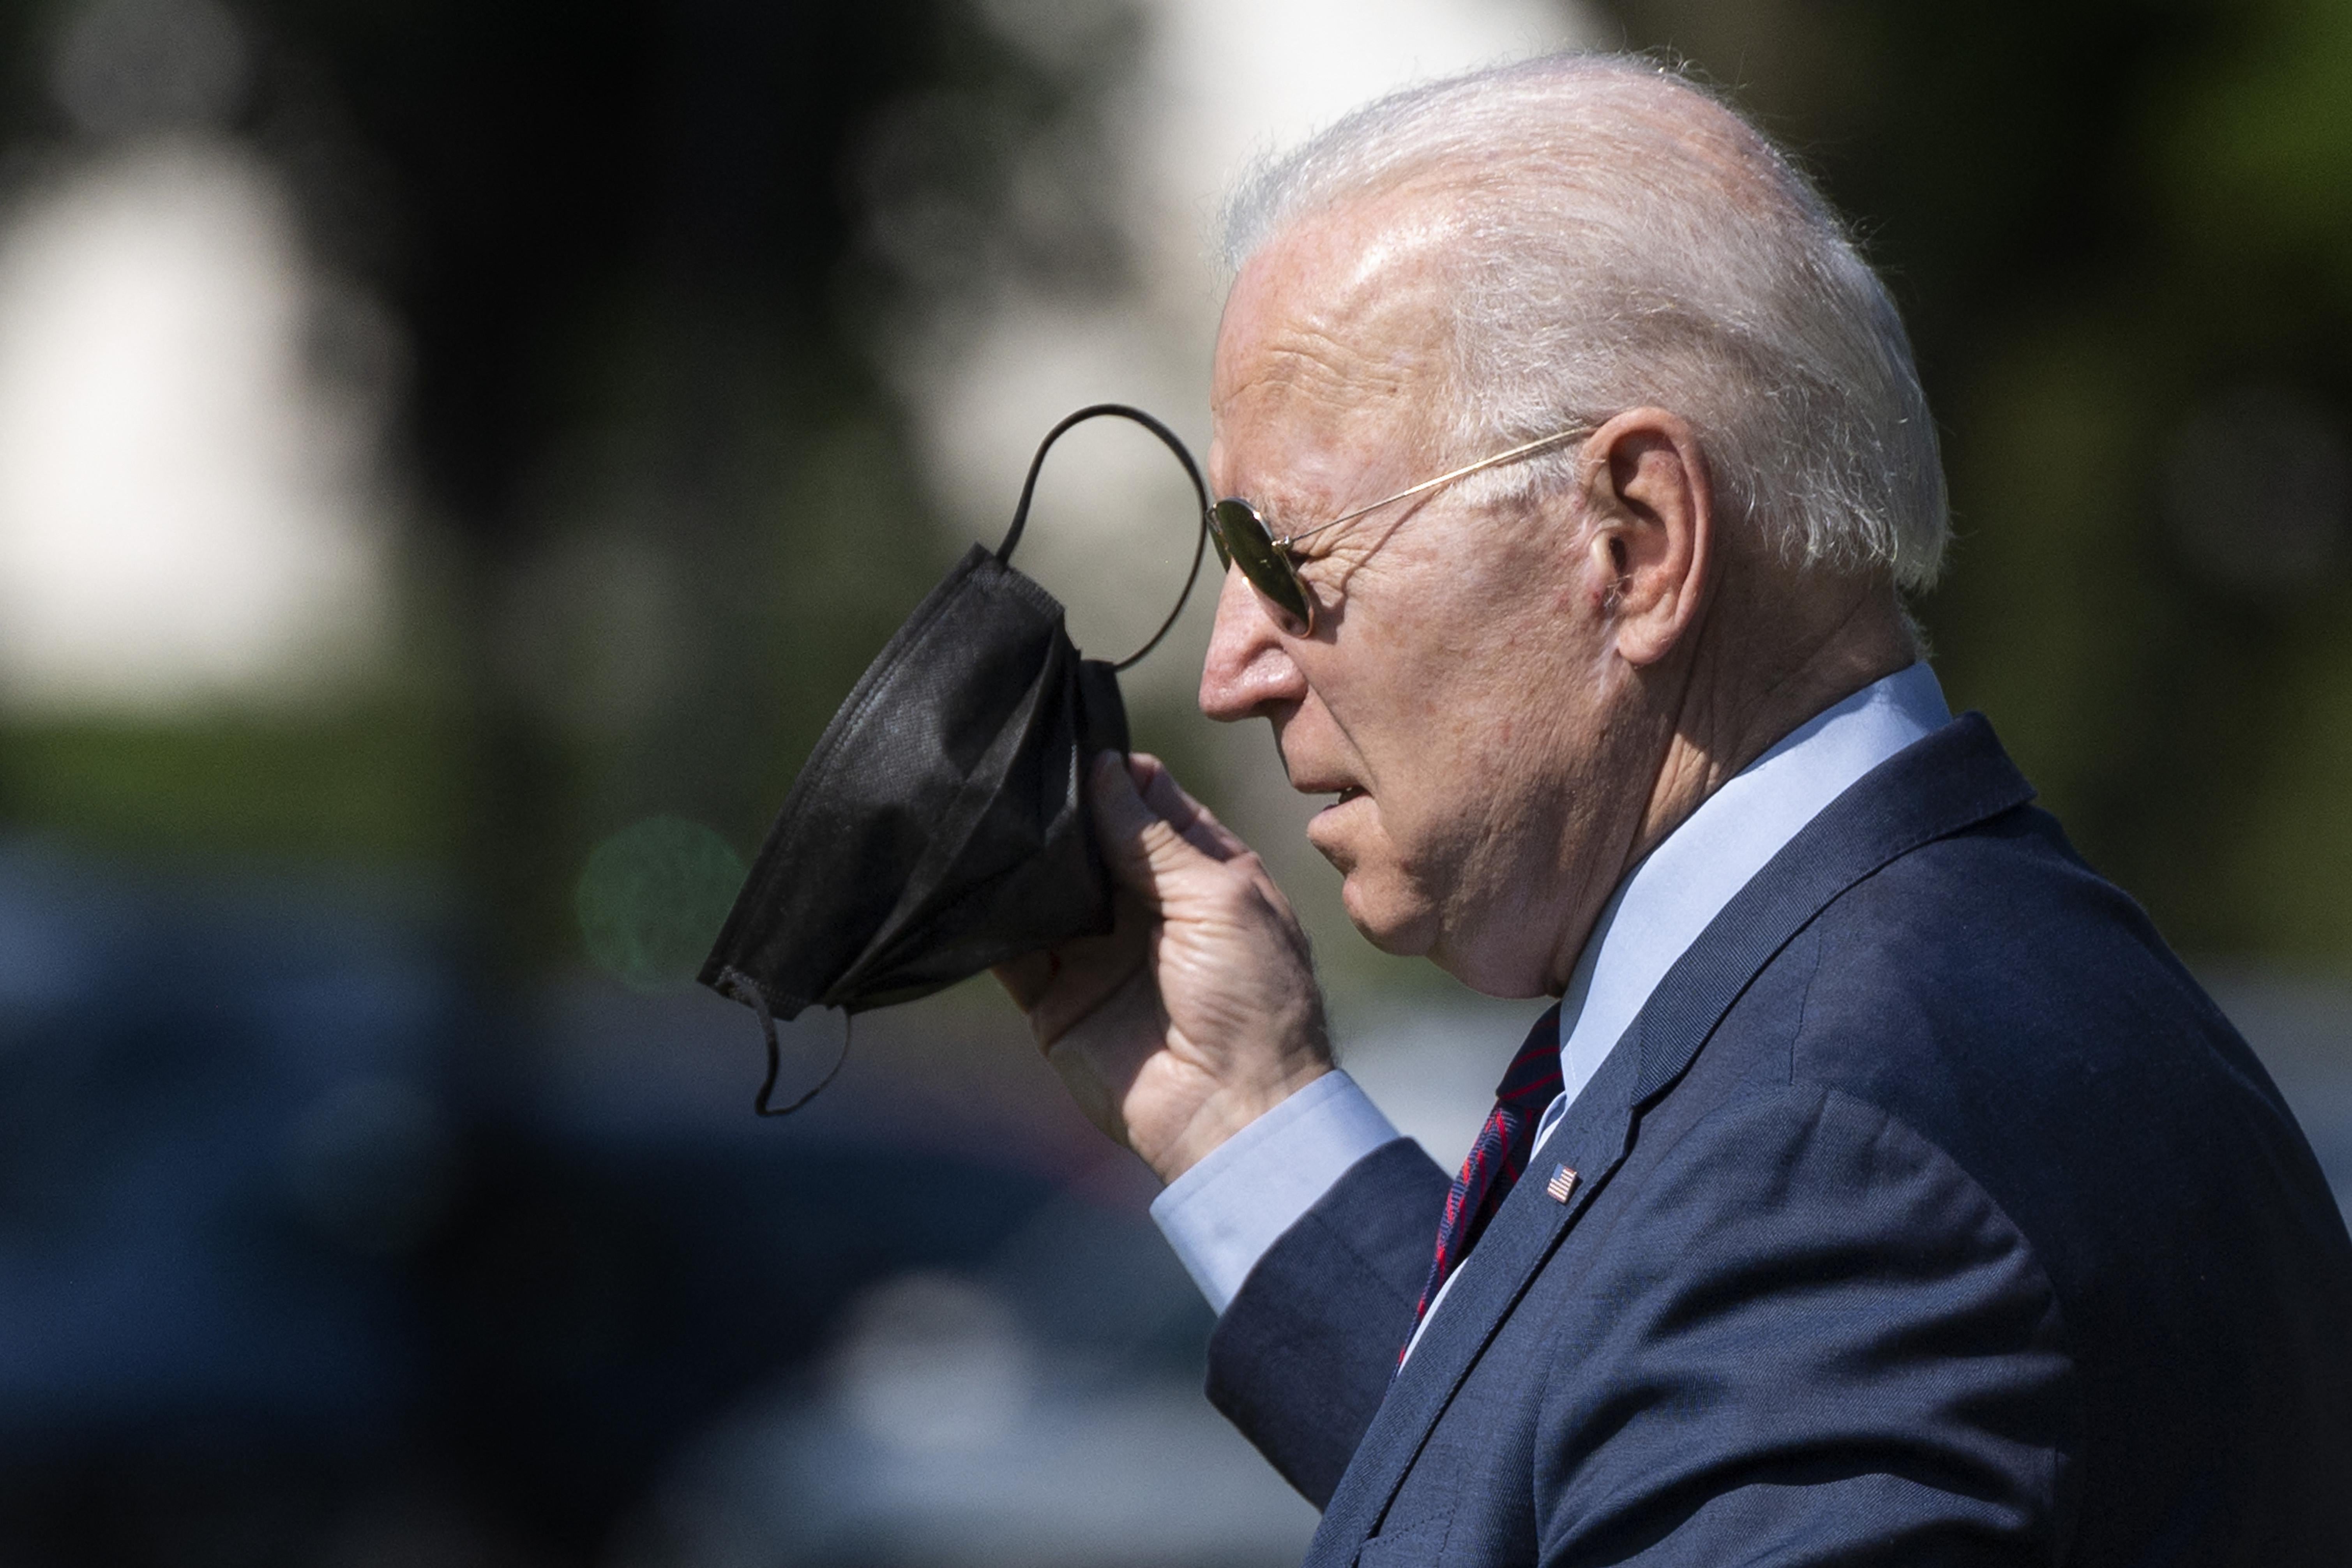 President Joe Biden removes his mask while wearing sunglasses outside